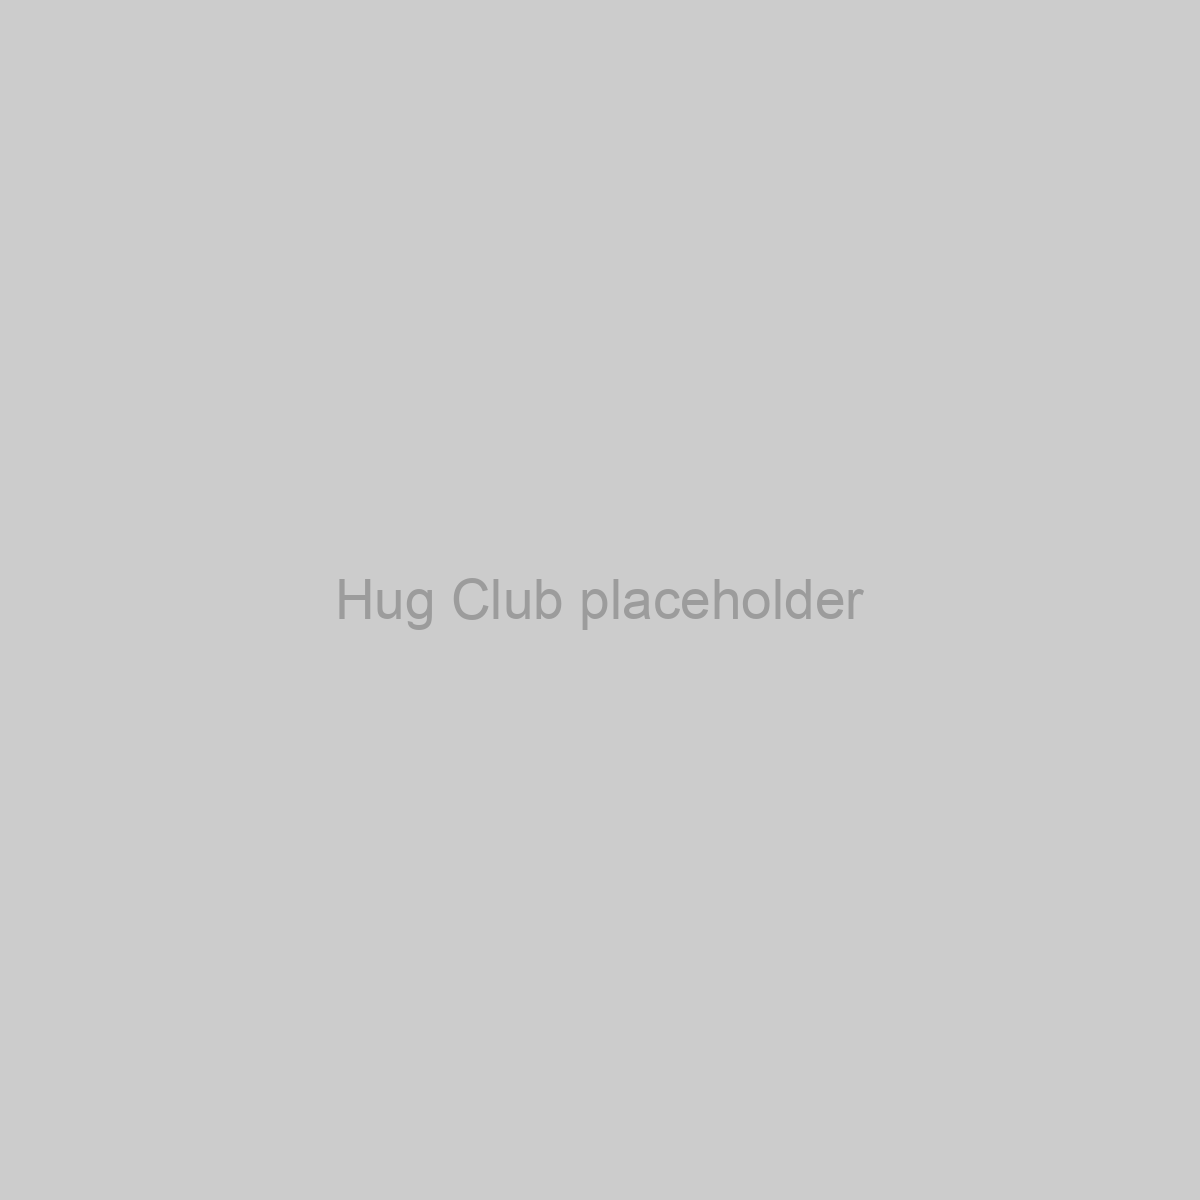 Hug Club Placeholder Image